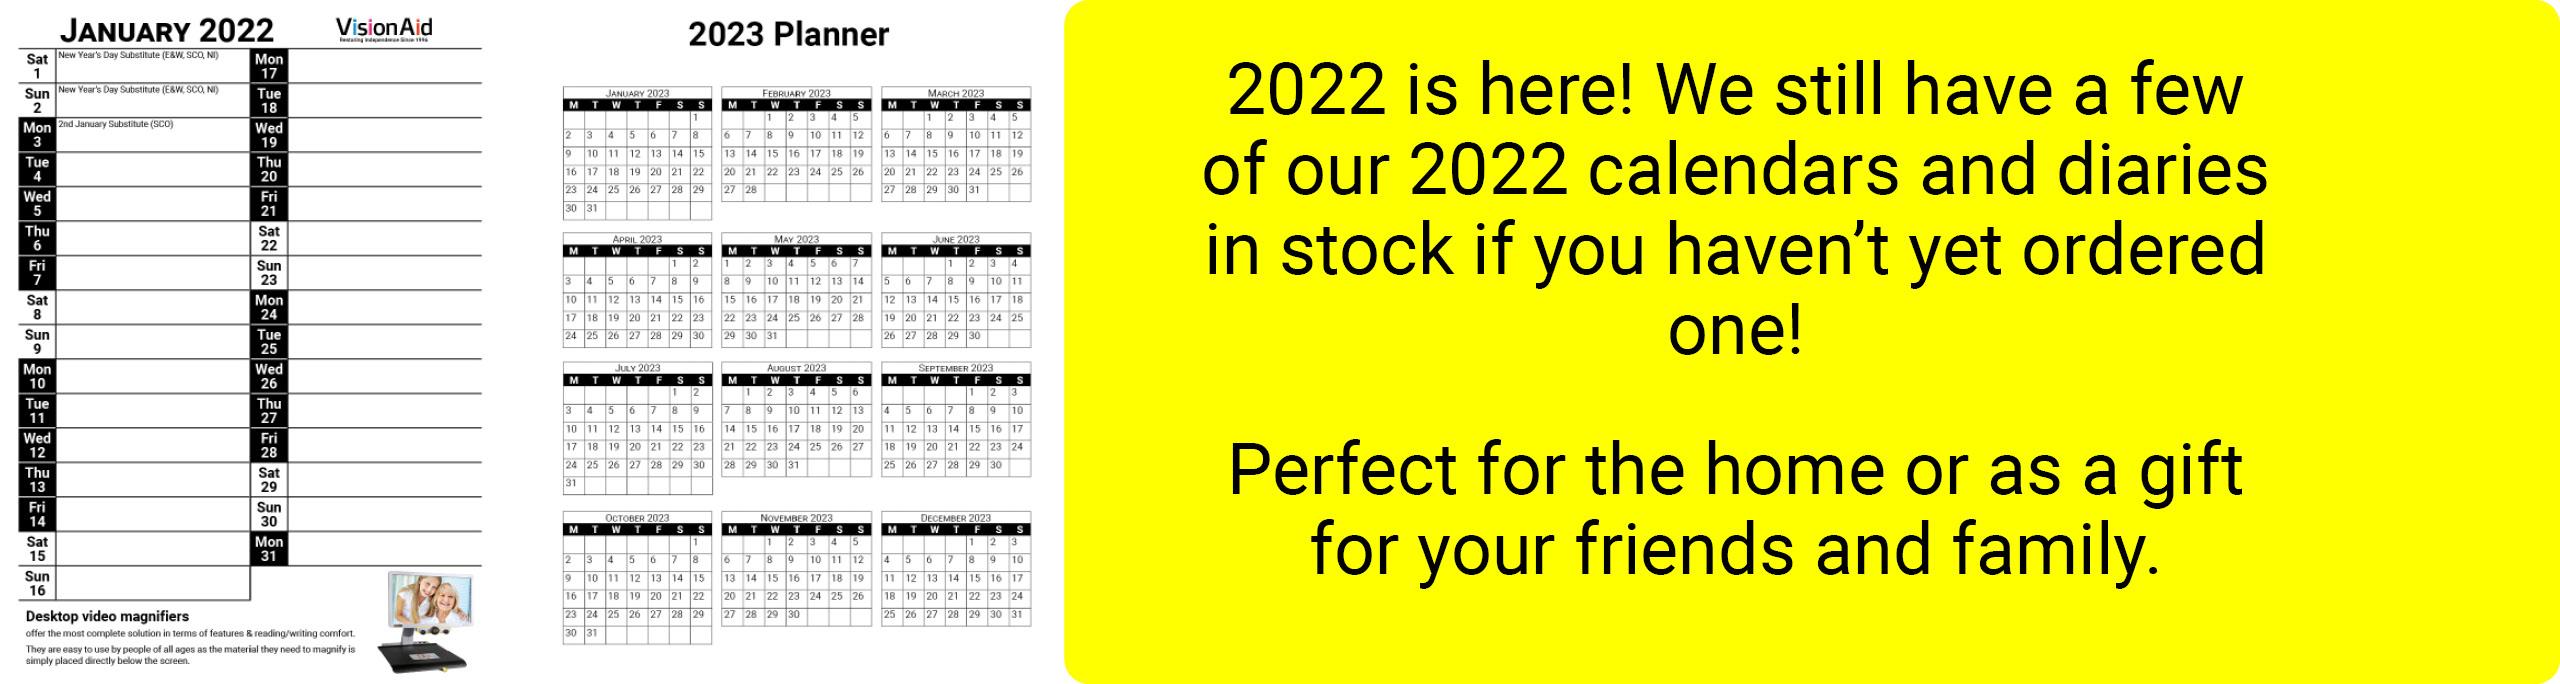 Large print 2022 calendars still available